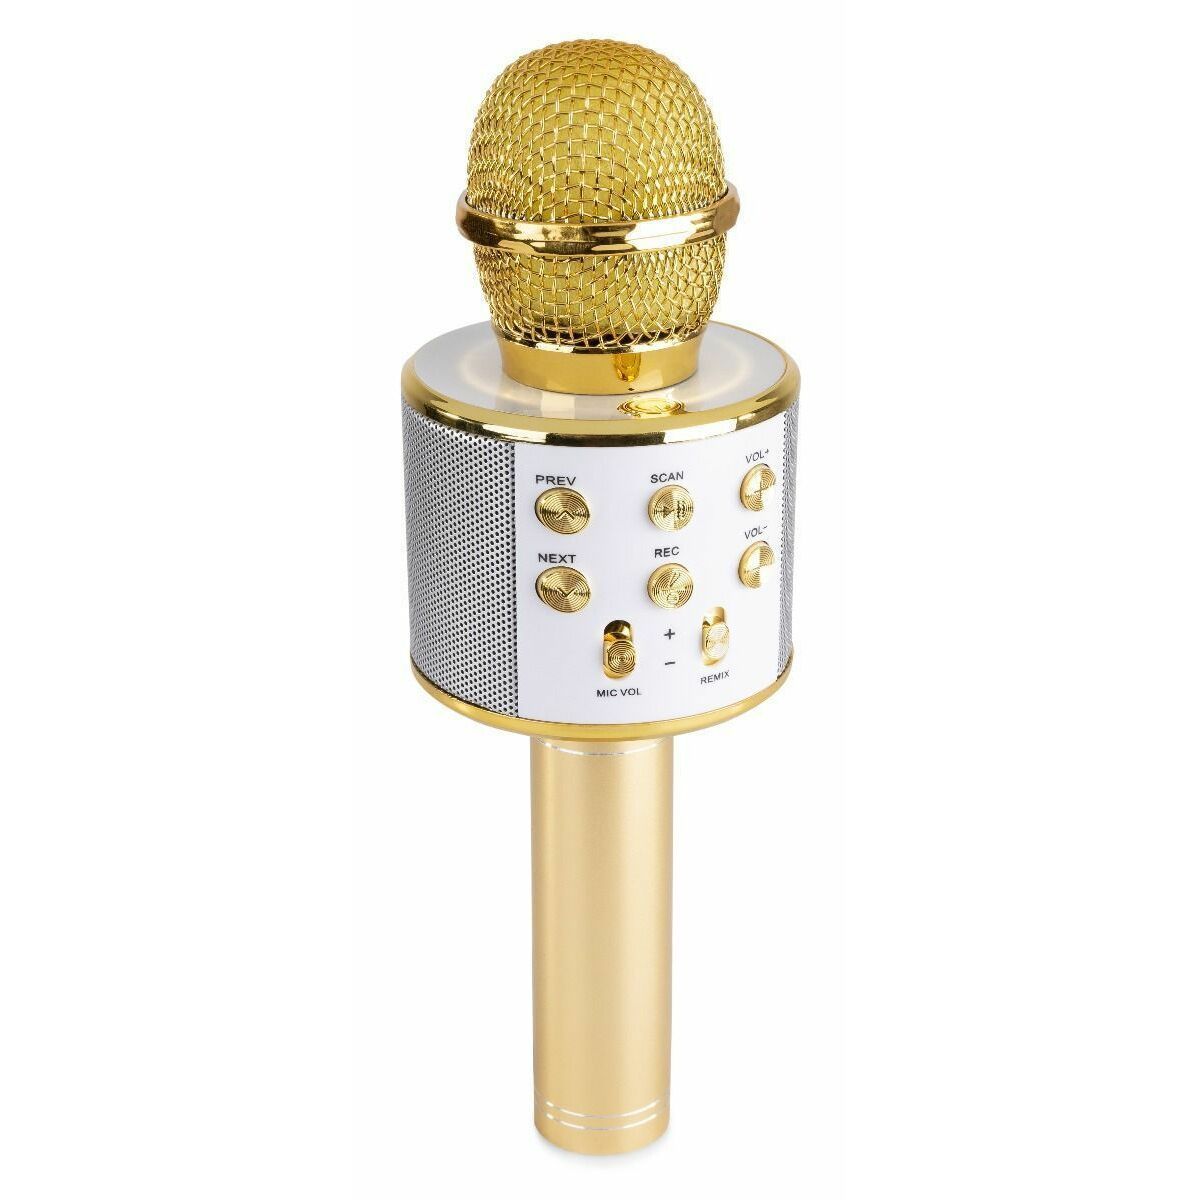 https://sonomateriel.com/media/catalog/product/cache/20f299e5bc71052efd6468ca5ac4a2b3/1/3/130133_max-km01-karaoke-microfoon-met-ingebouwde-speaker-bluetooth-en-mp3-goud.jpg